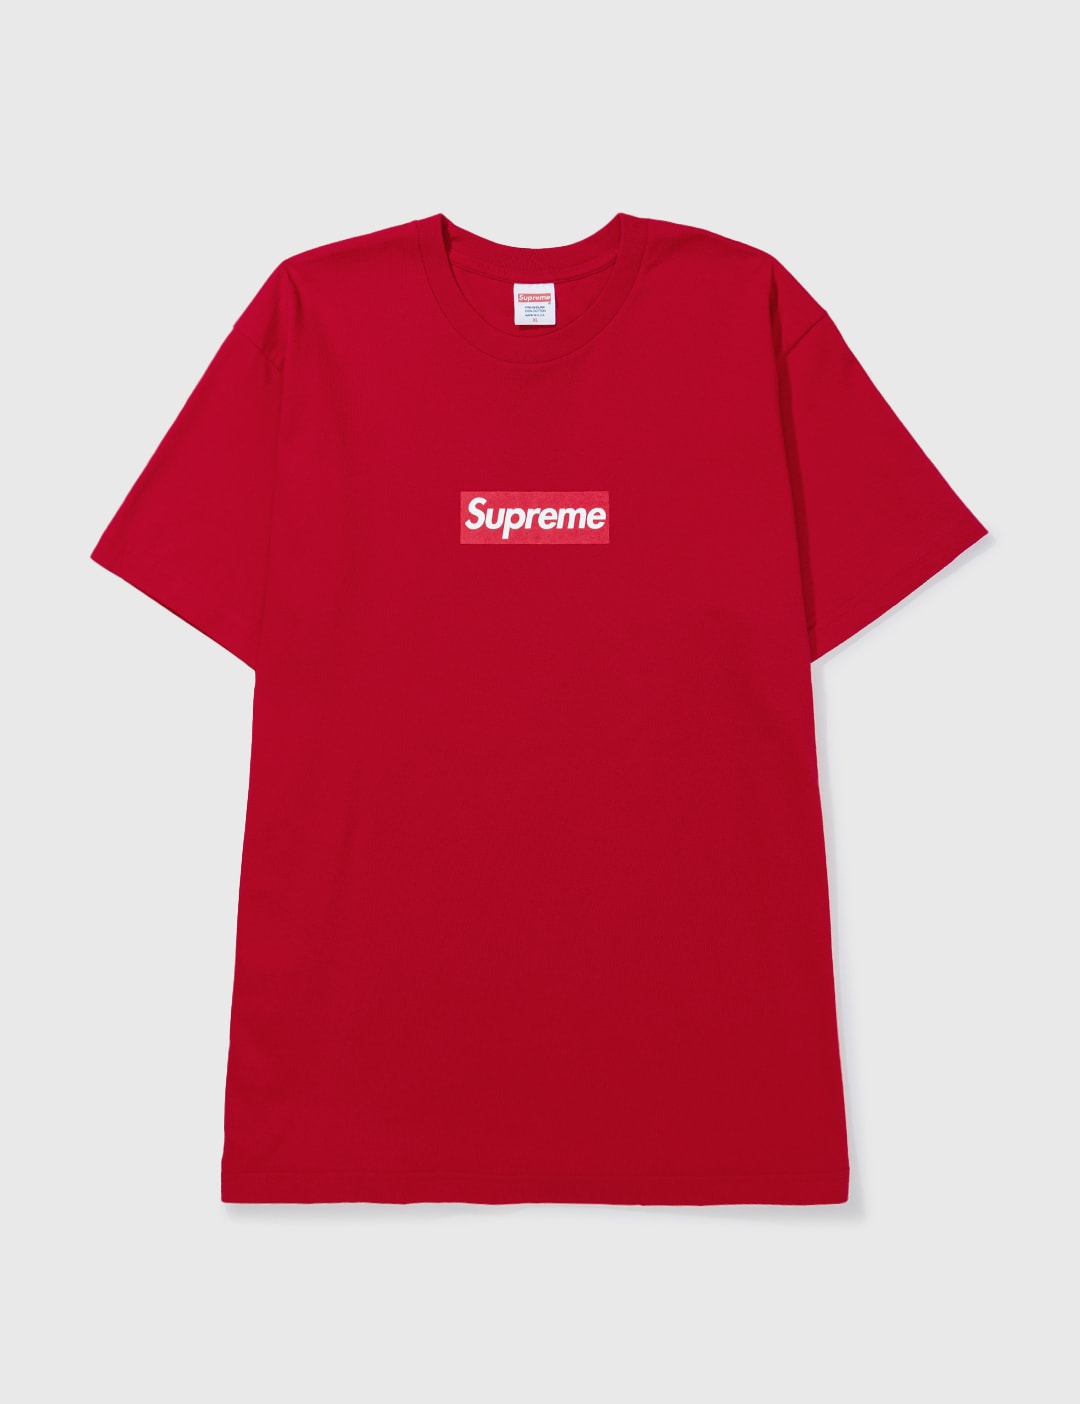 Supreme - 20TH ANNIVERSARY BOX LOGO T-shirt